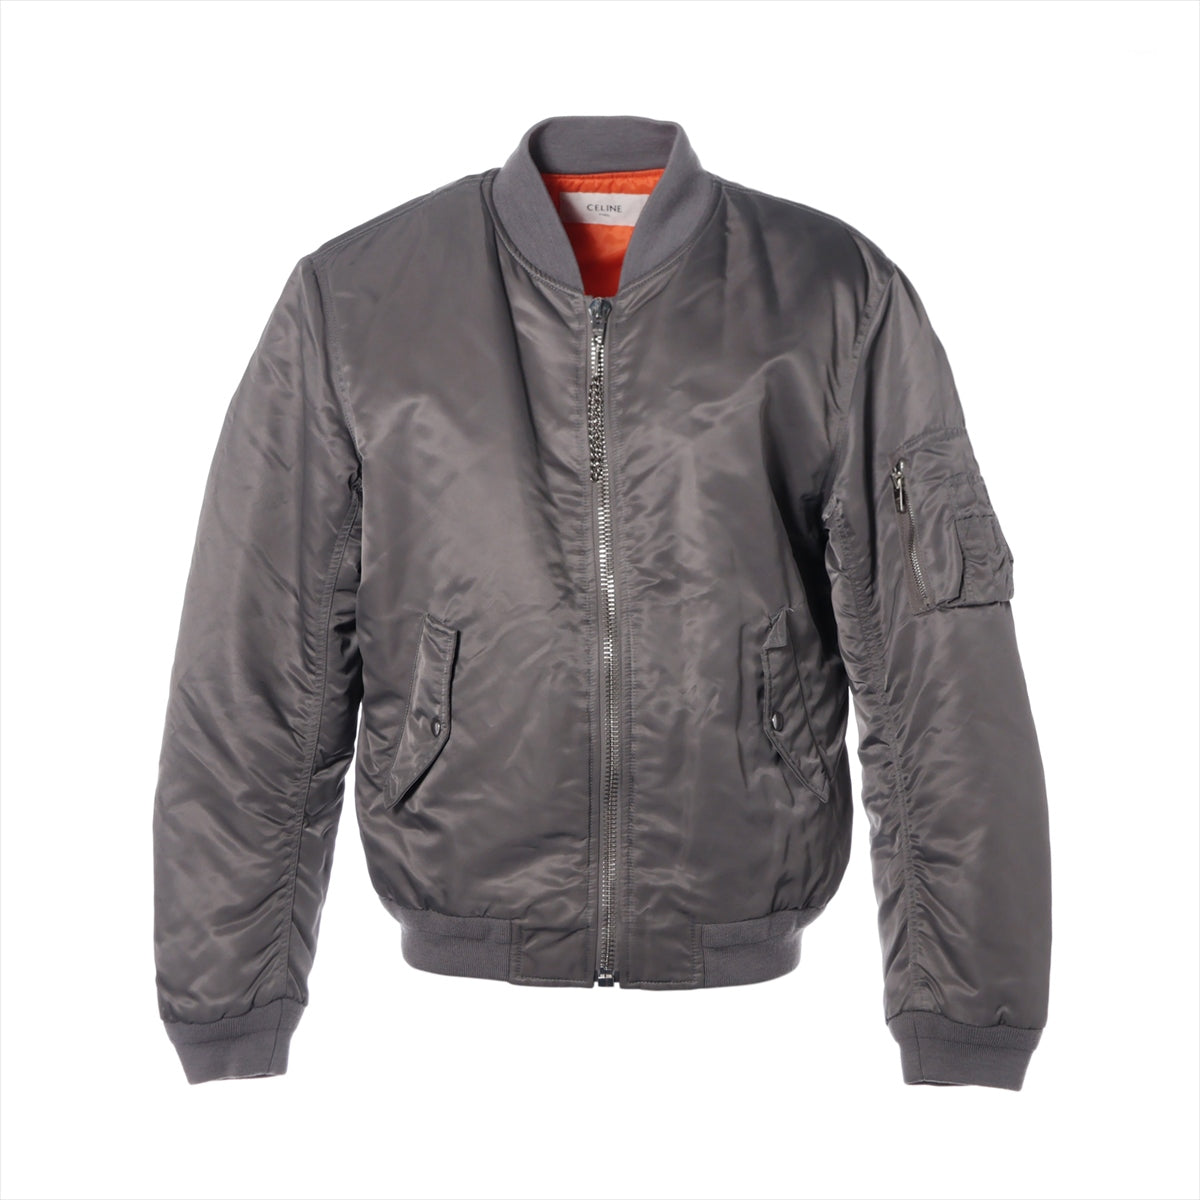 CELINE Nylon BOMBER JACKET 48 Men's light grey  MA-1 Military jacket 2W426889O